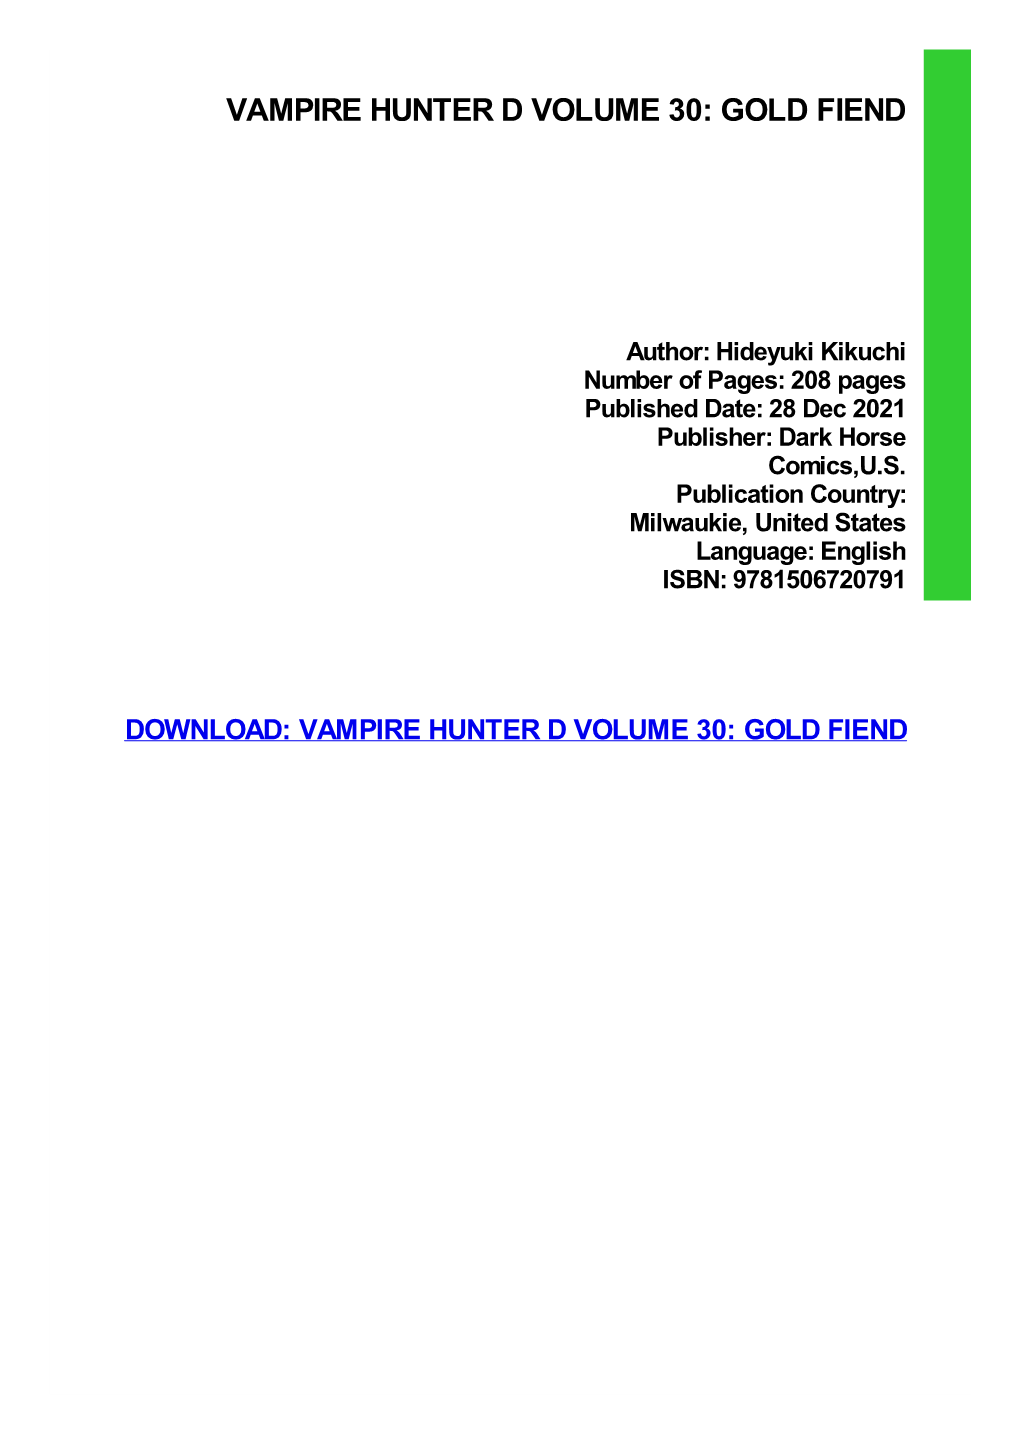 Vampire Hunter D Volume 30: Gold Fiend Ebook